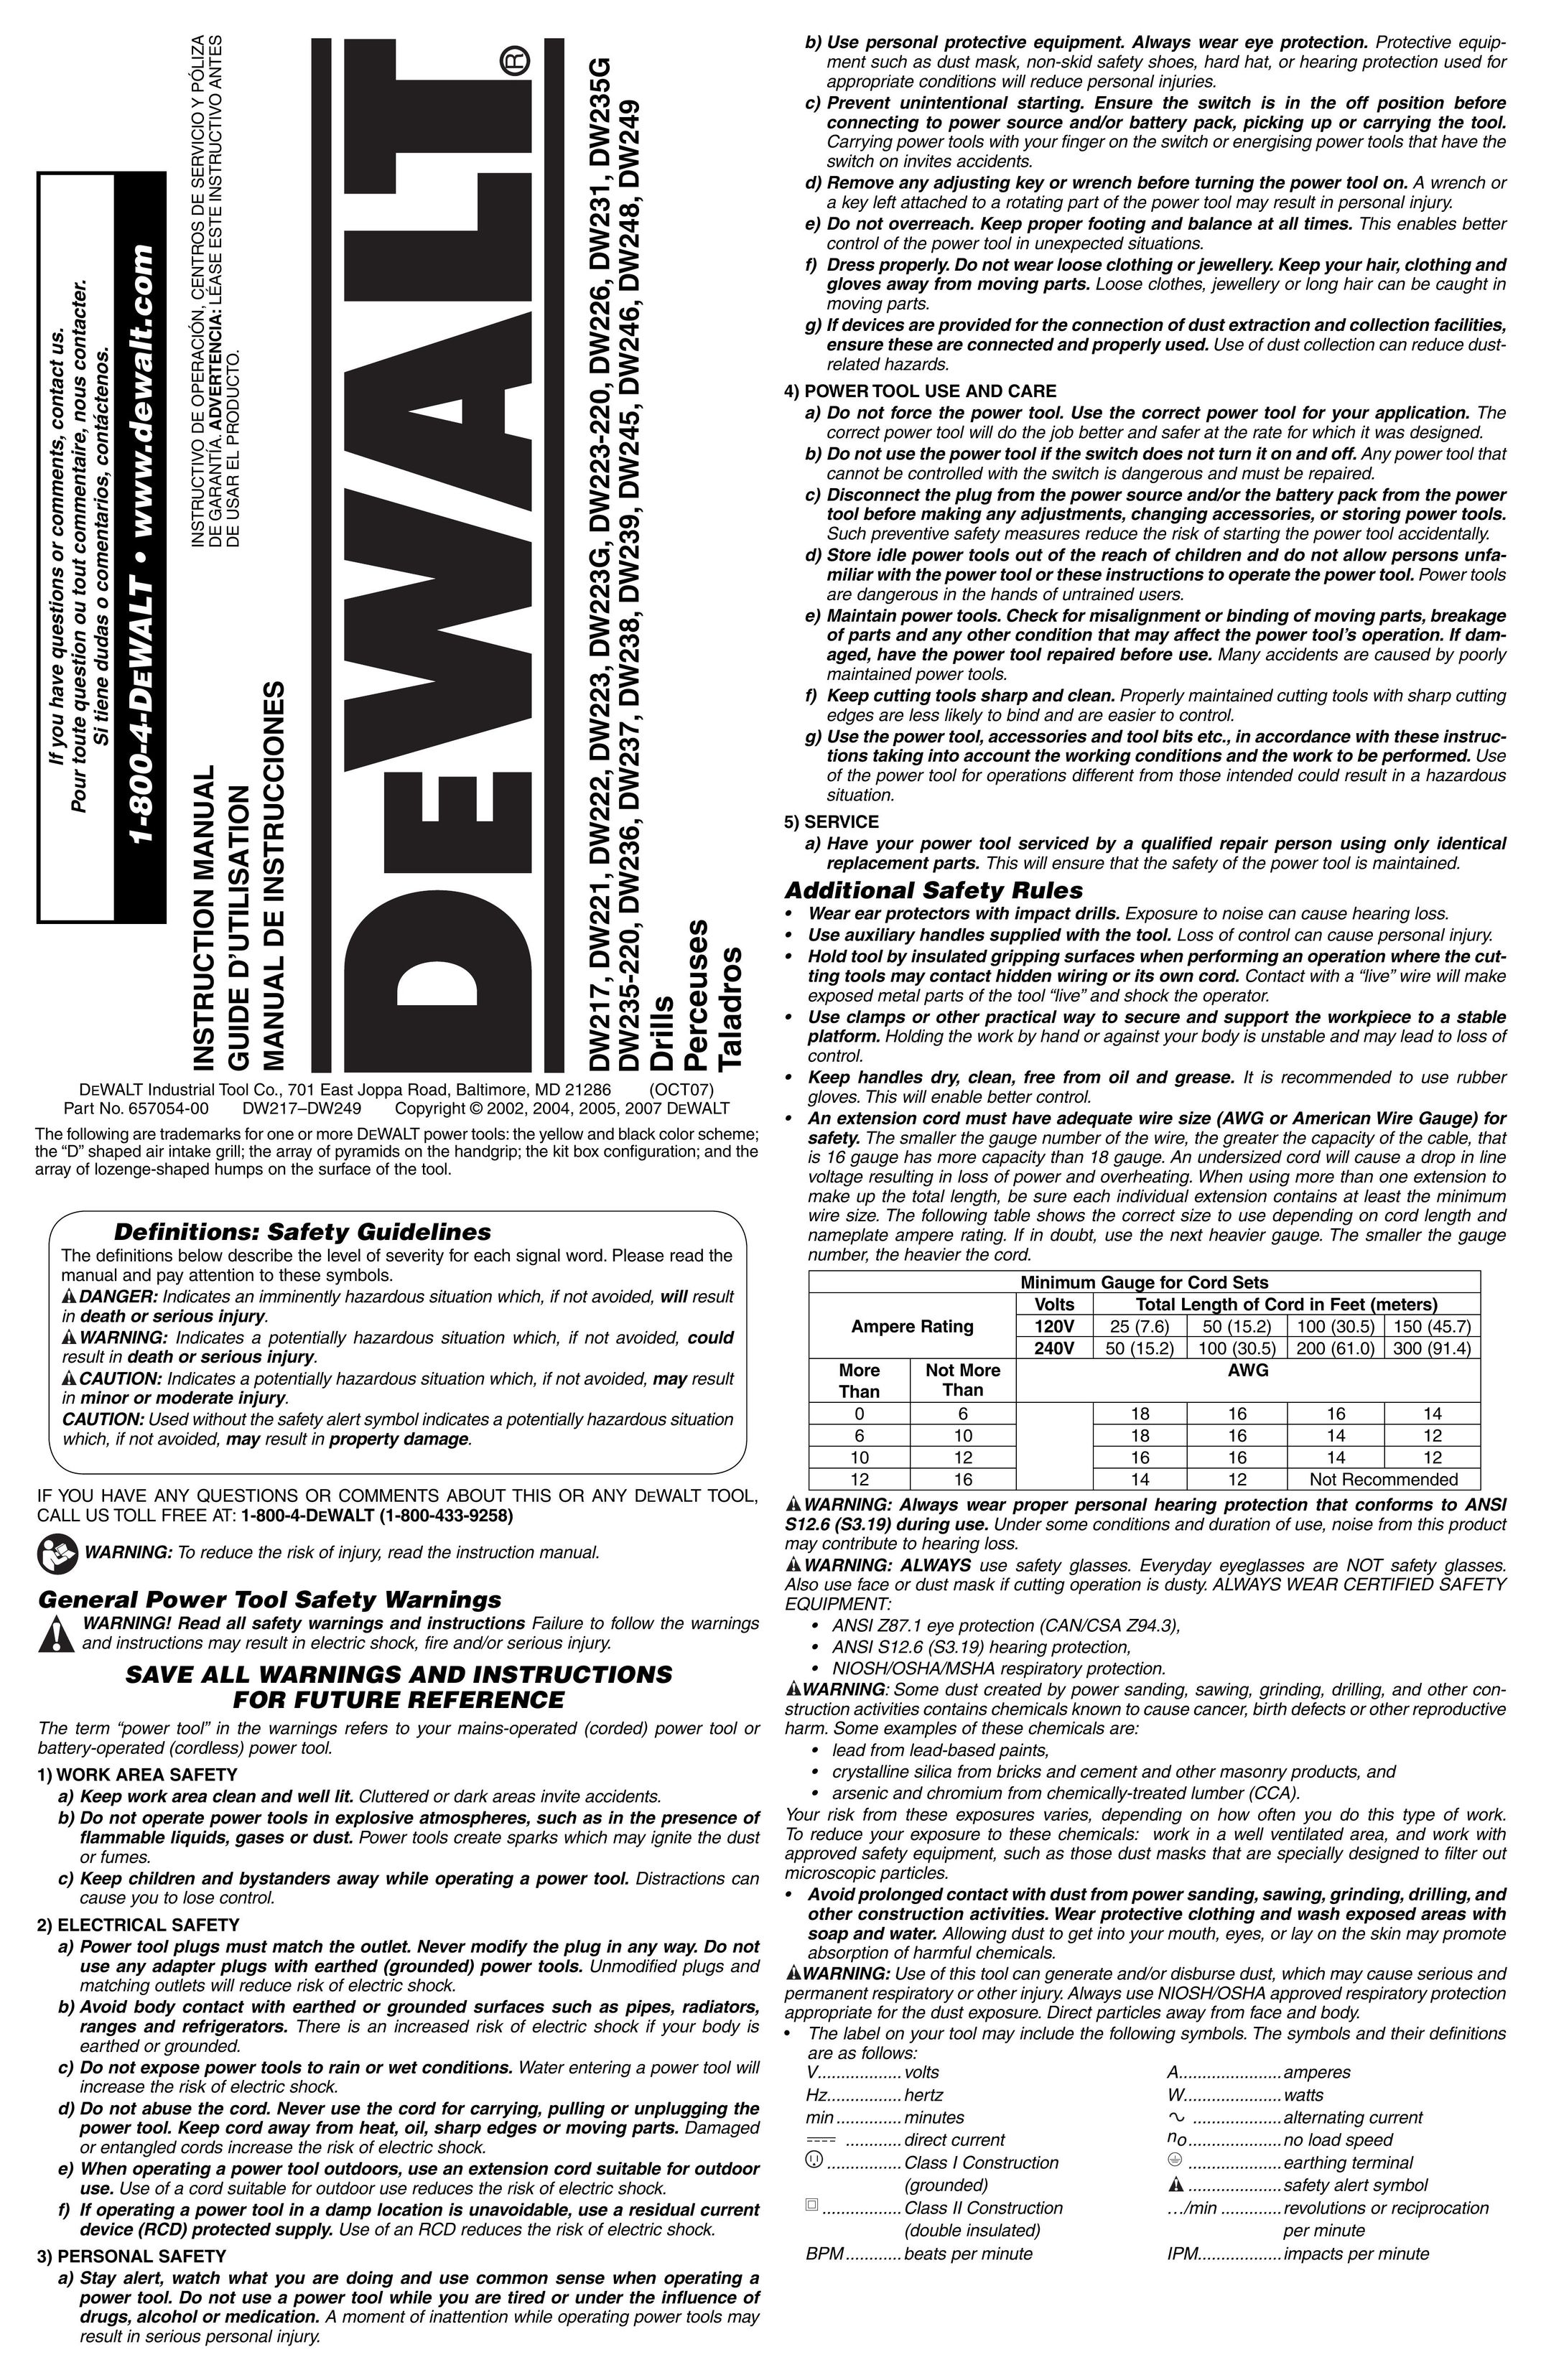 DeWalt DW226 Drill User Manual